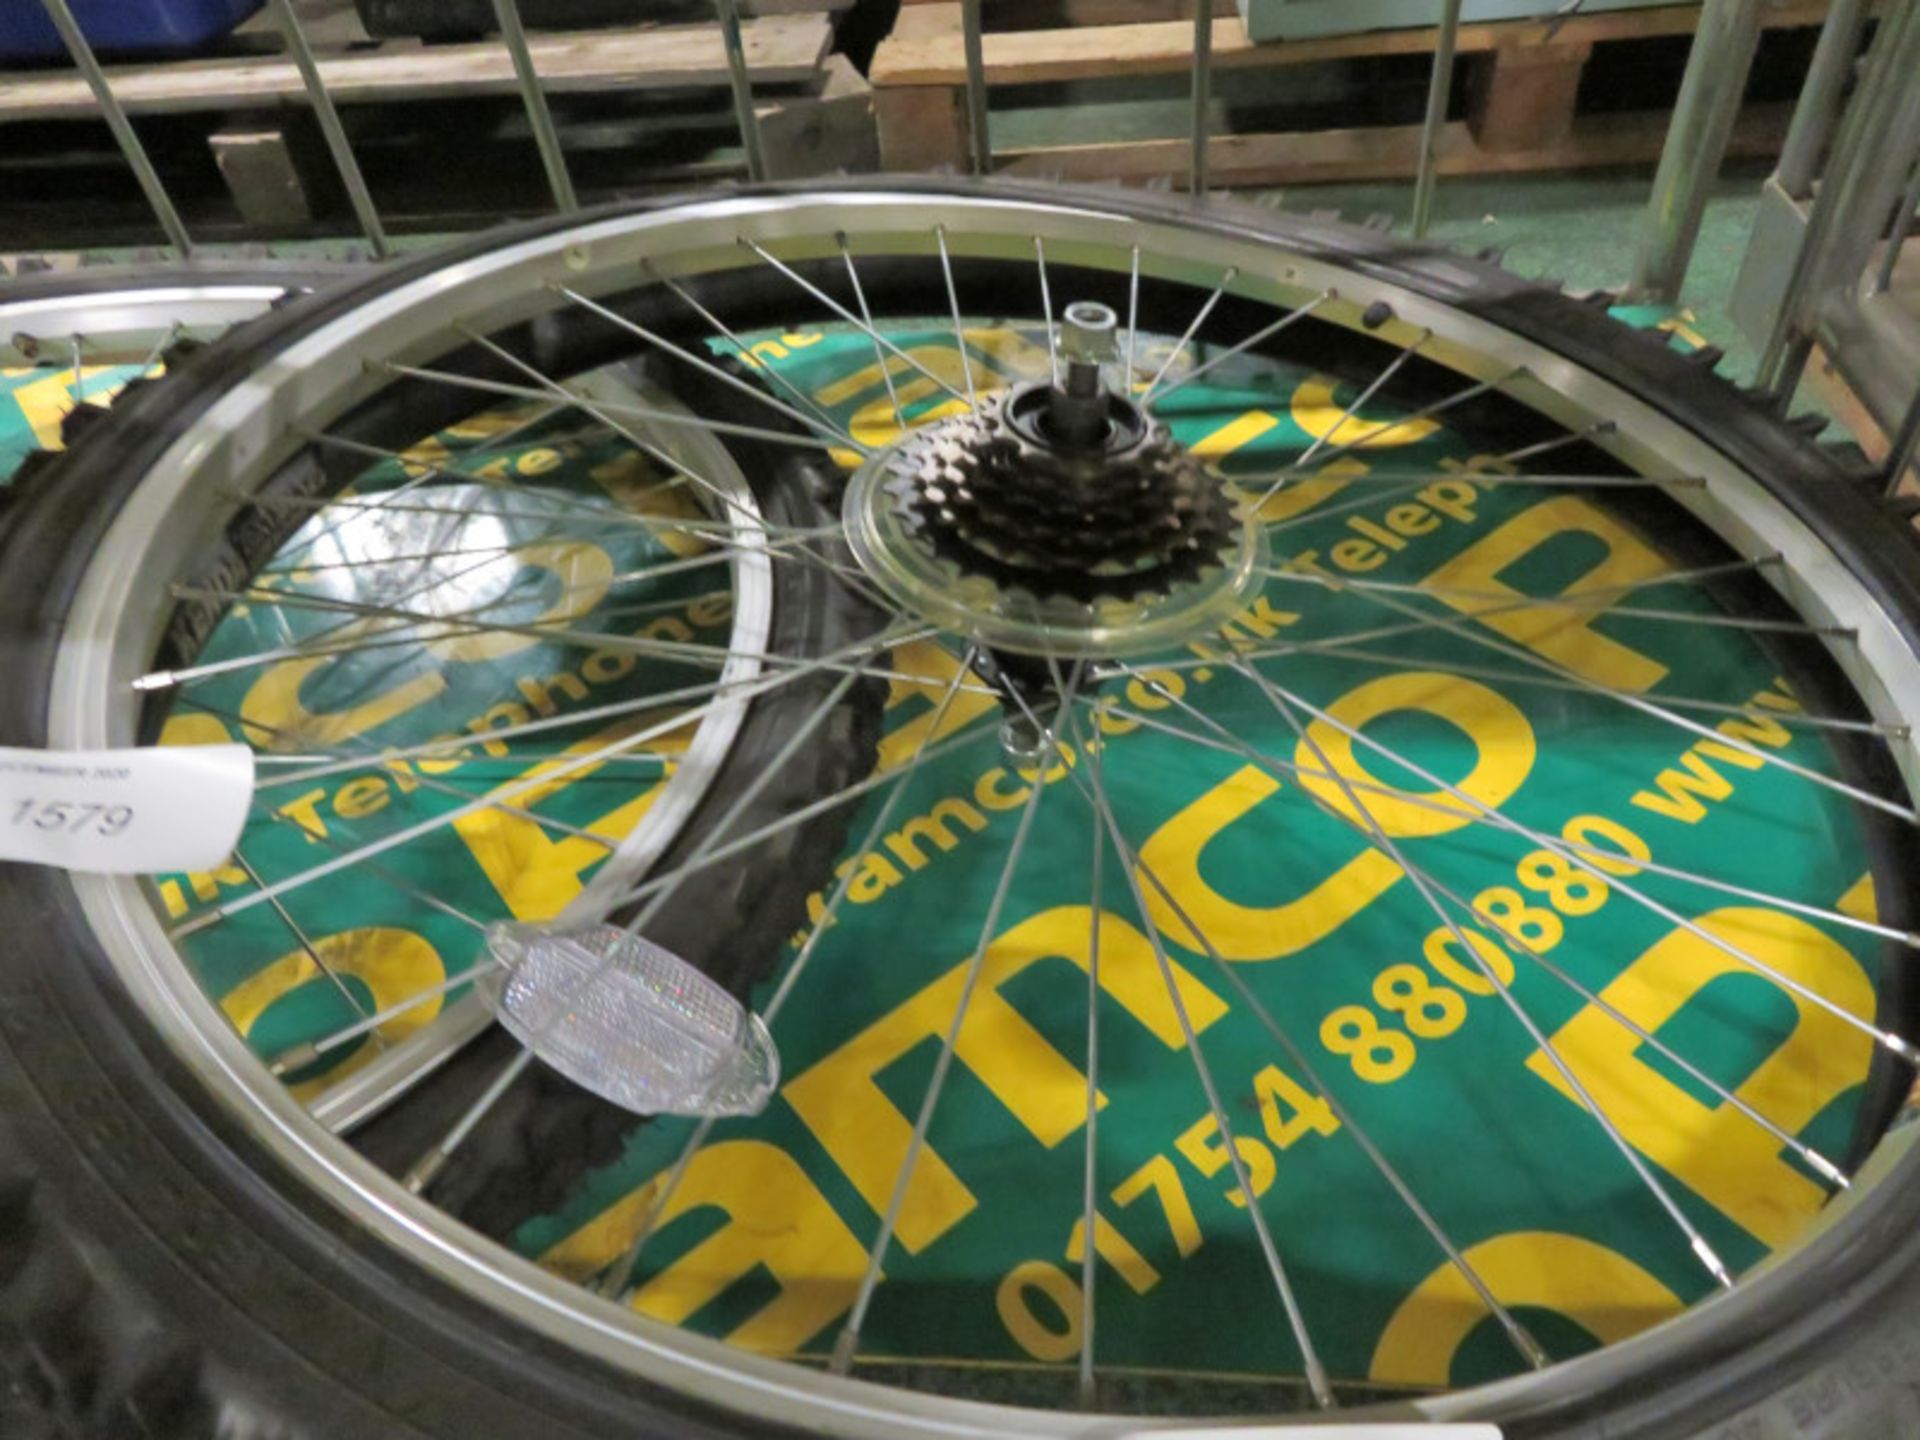 2x Bike wheels - 40-65 PSI - 2.8-4.6 - 26x1.95 - Image 2 of 2